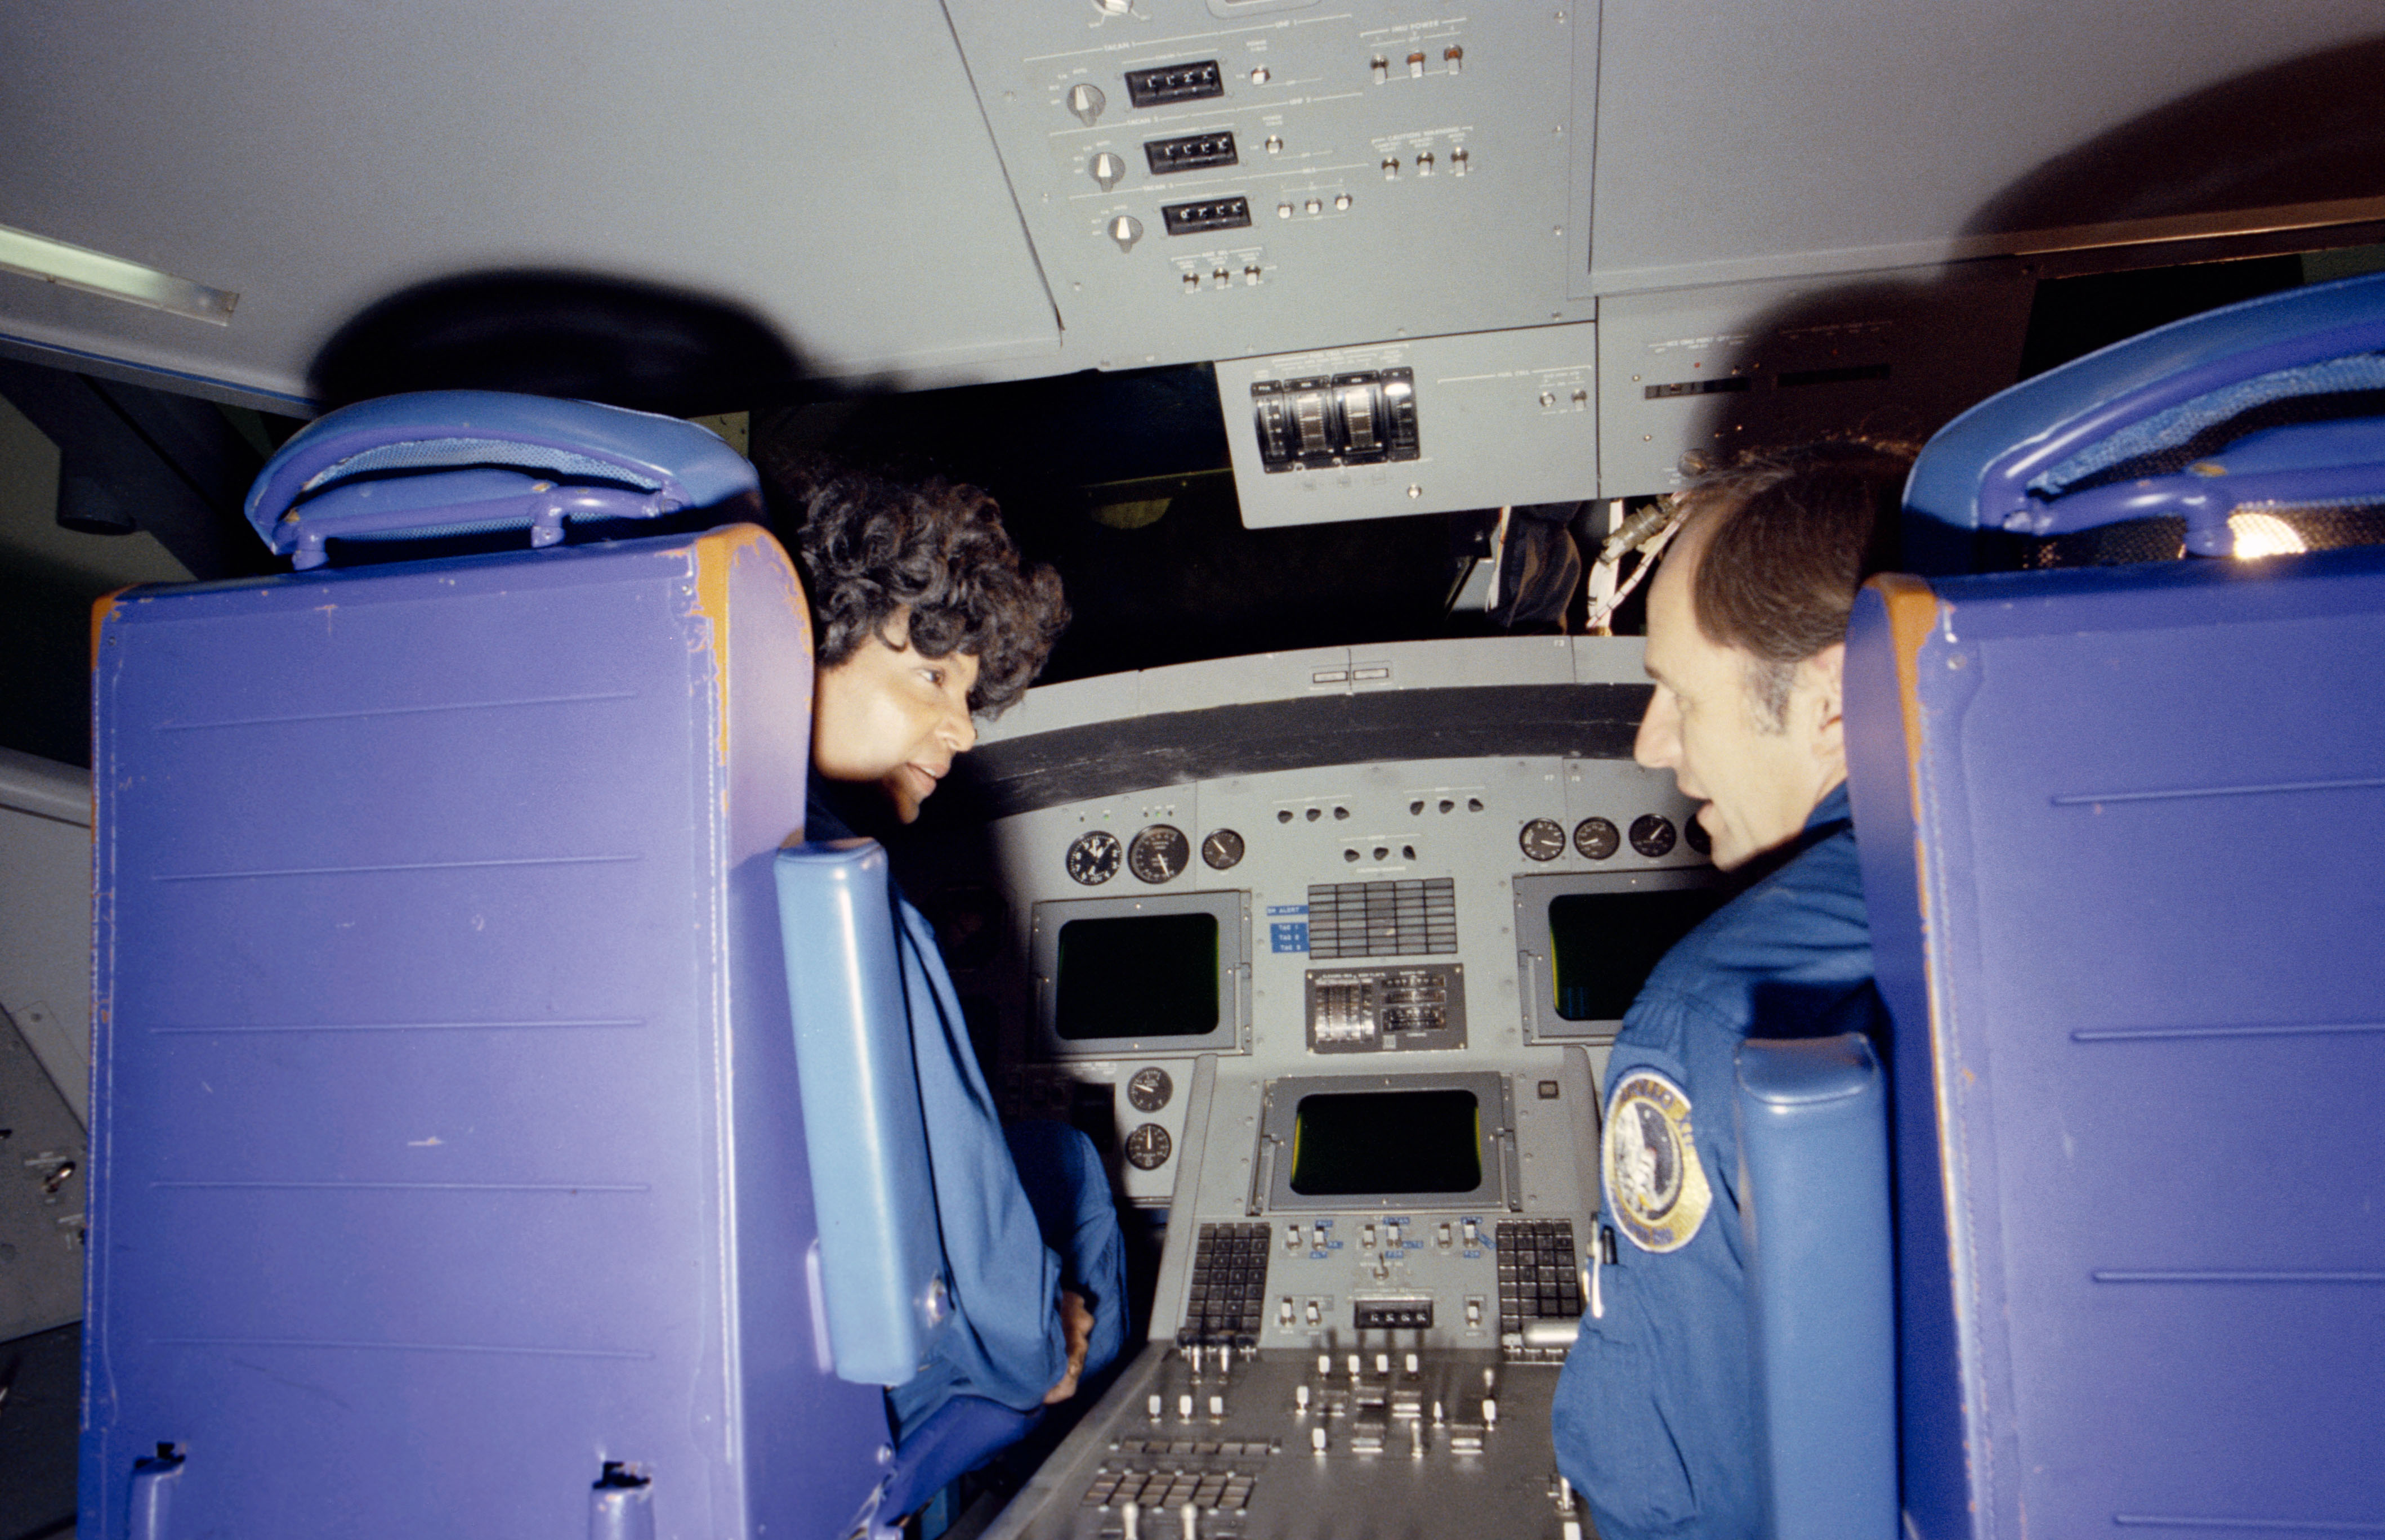 Star Trek cast member Nichelle Nichols, left, in the shuttle simulator with astronaut Alan L. Bean at NASA's Johnson Space Center (JSC) in Houston